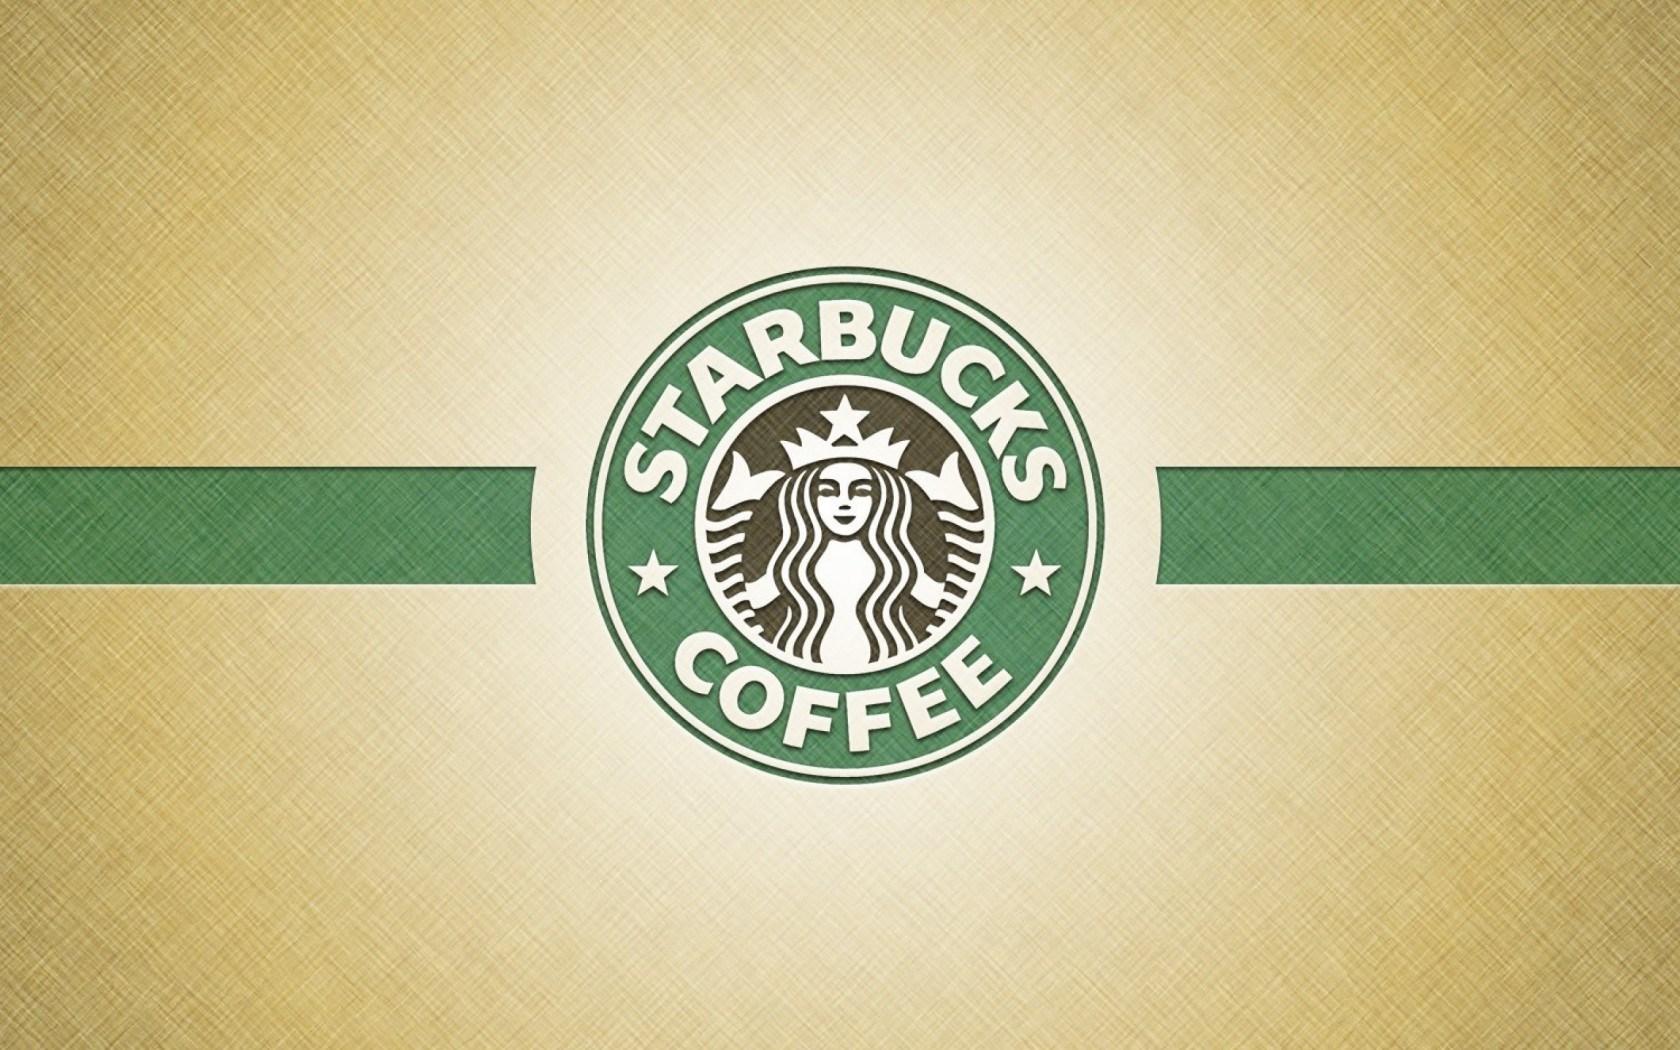 Large Starbucks Logo - STARBUCKS COFFEE - St Thomas Street - London Bridge Revealed